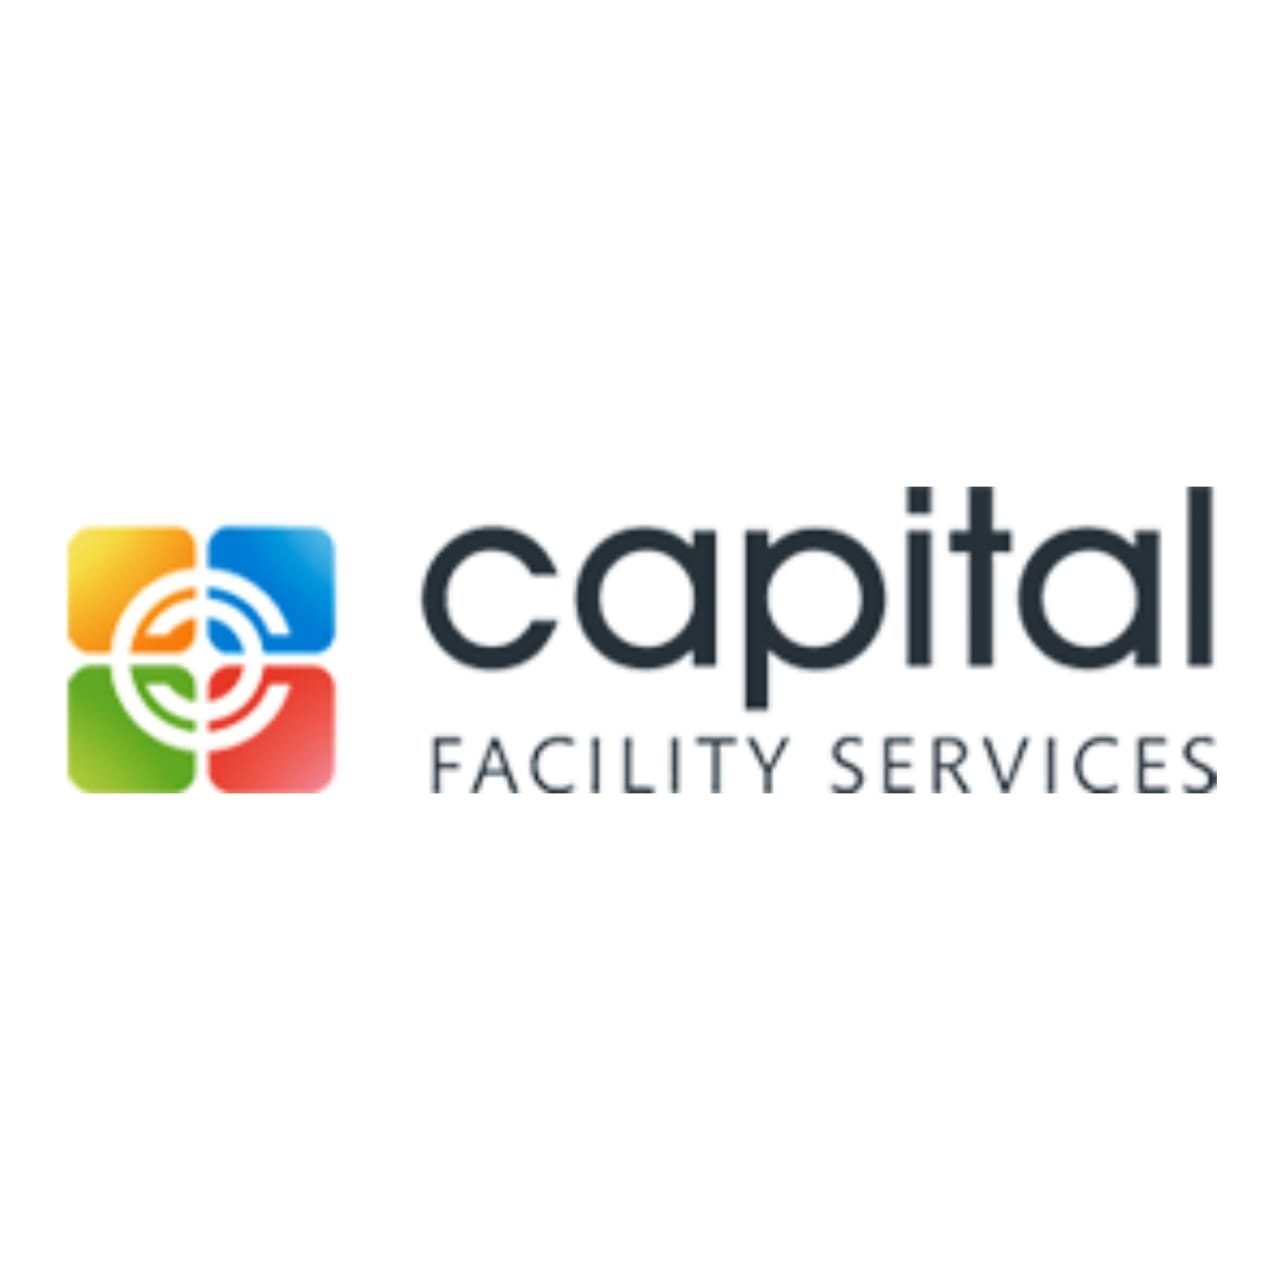 Capital Facility Services